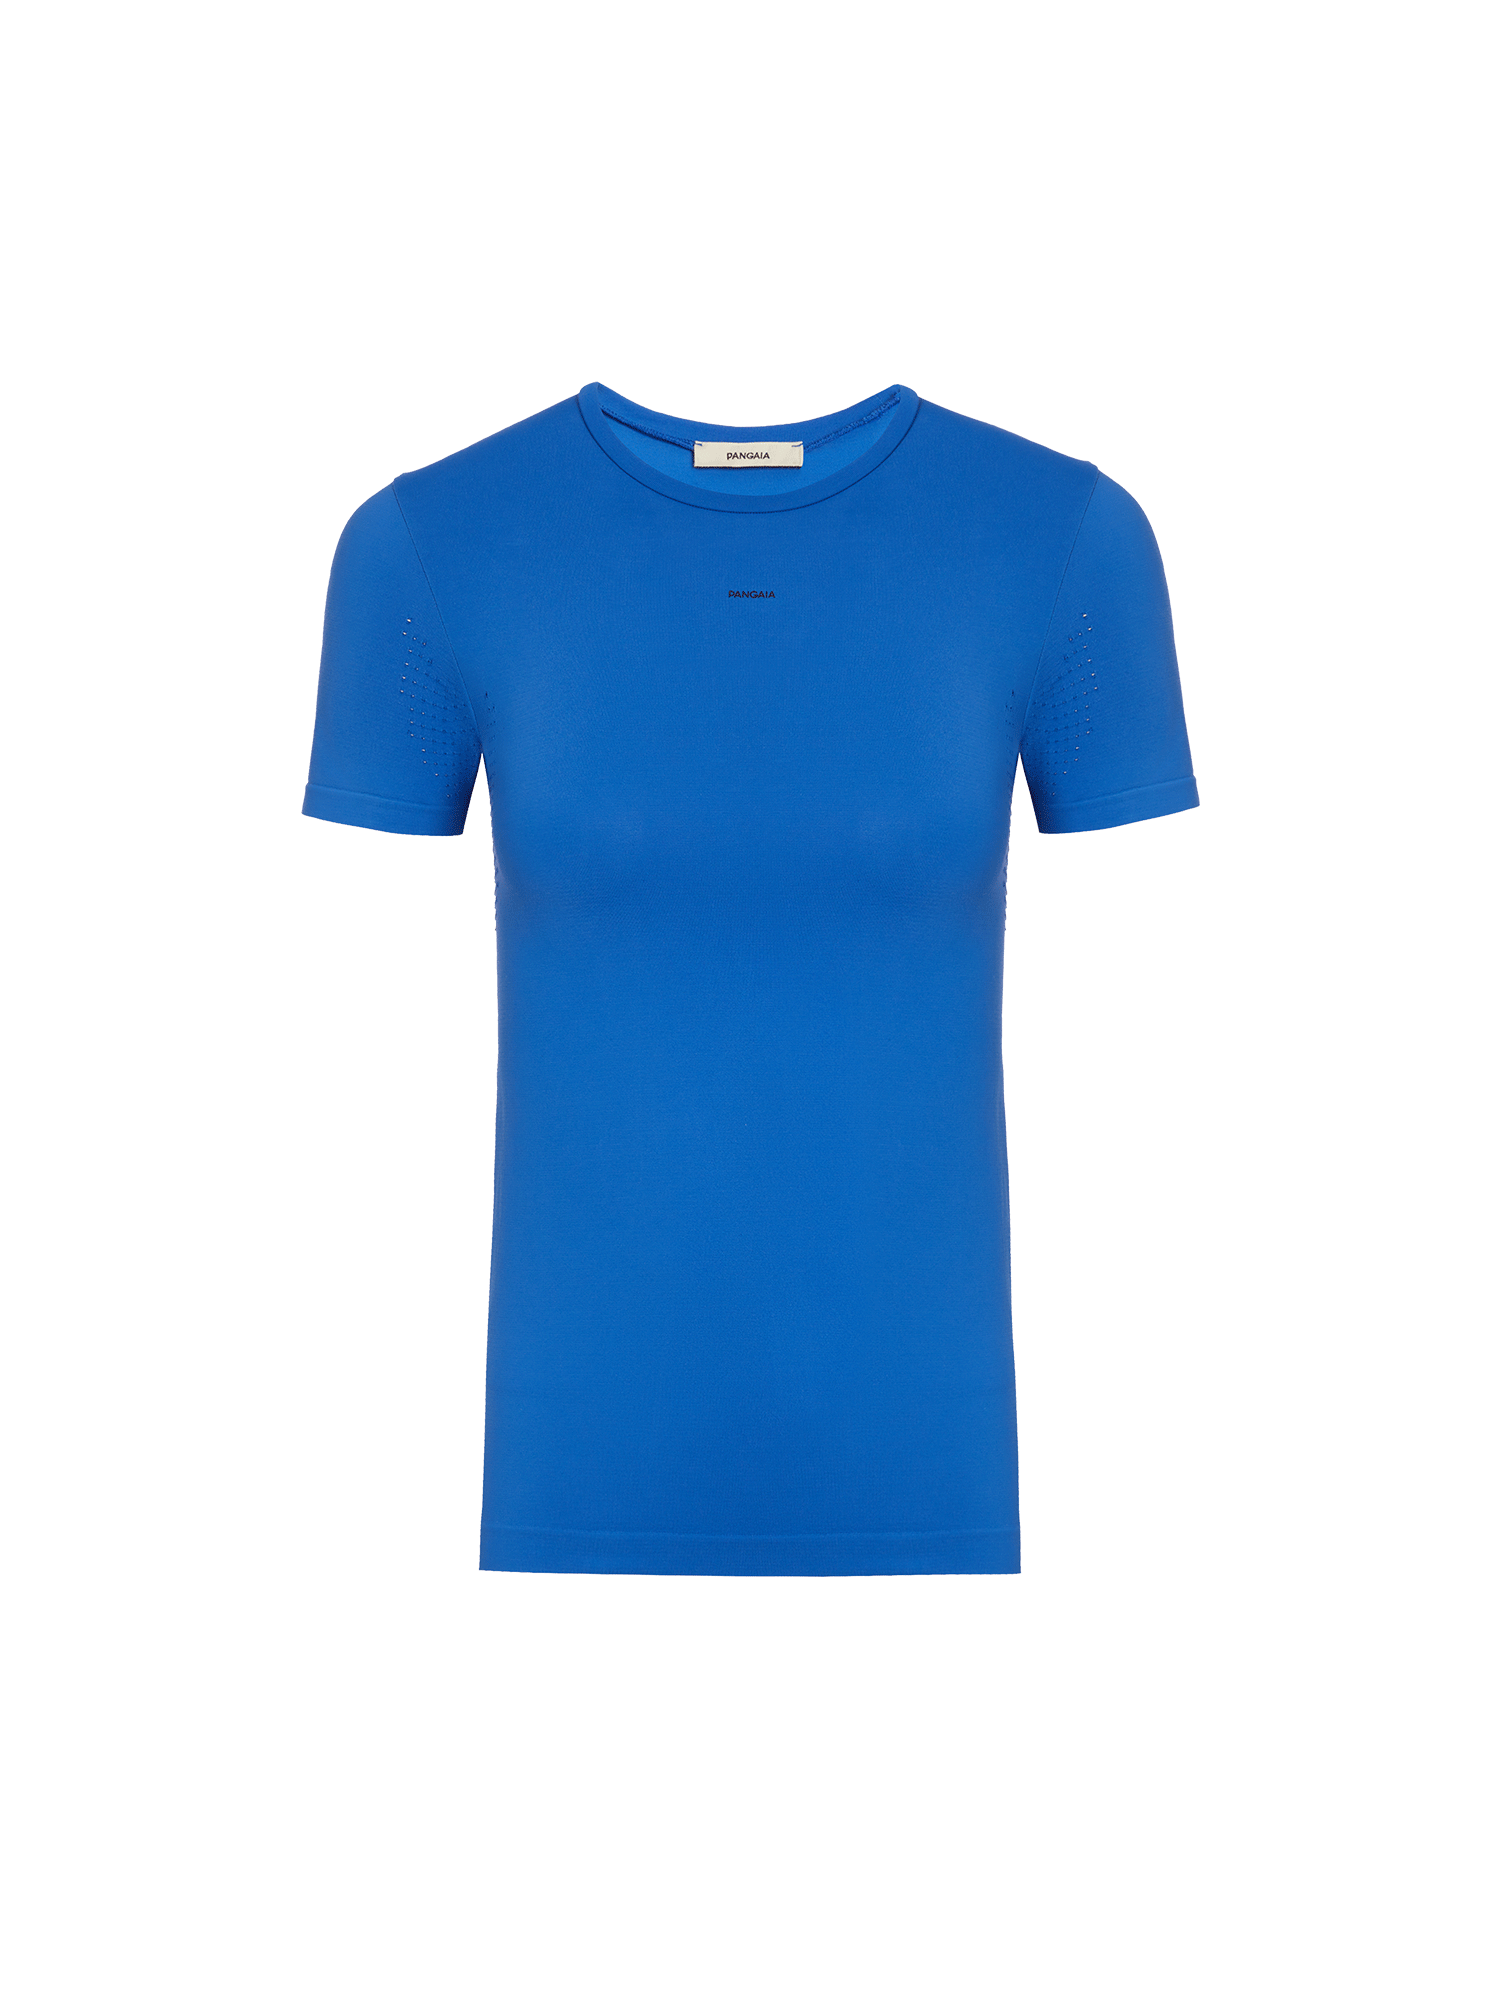 PANGAIA - Women's Plant-Stretch T-Shirt - Cobalt Blue S